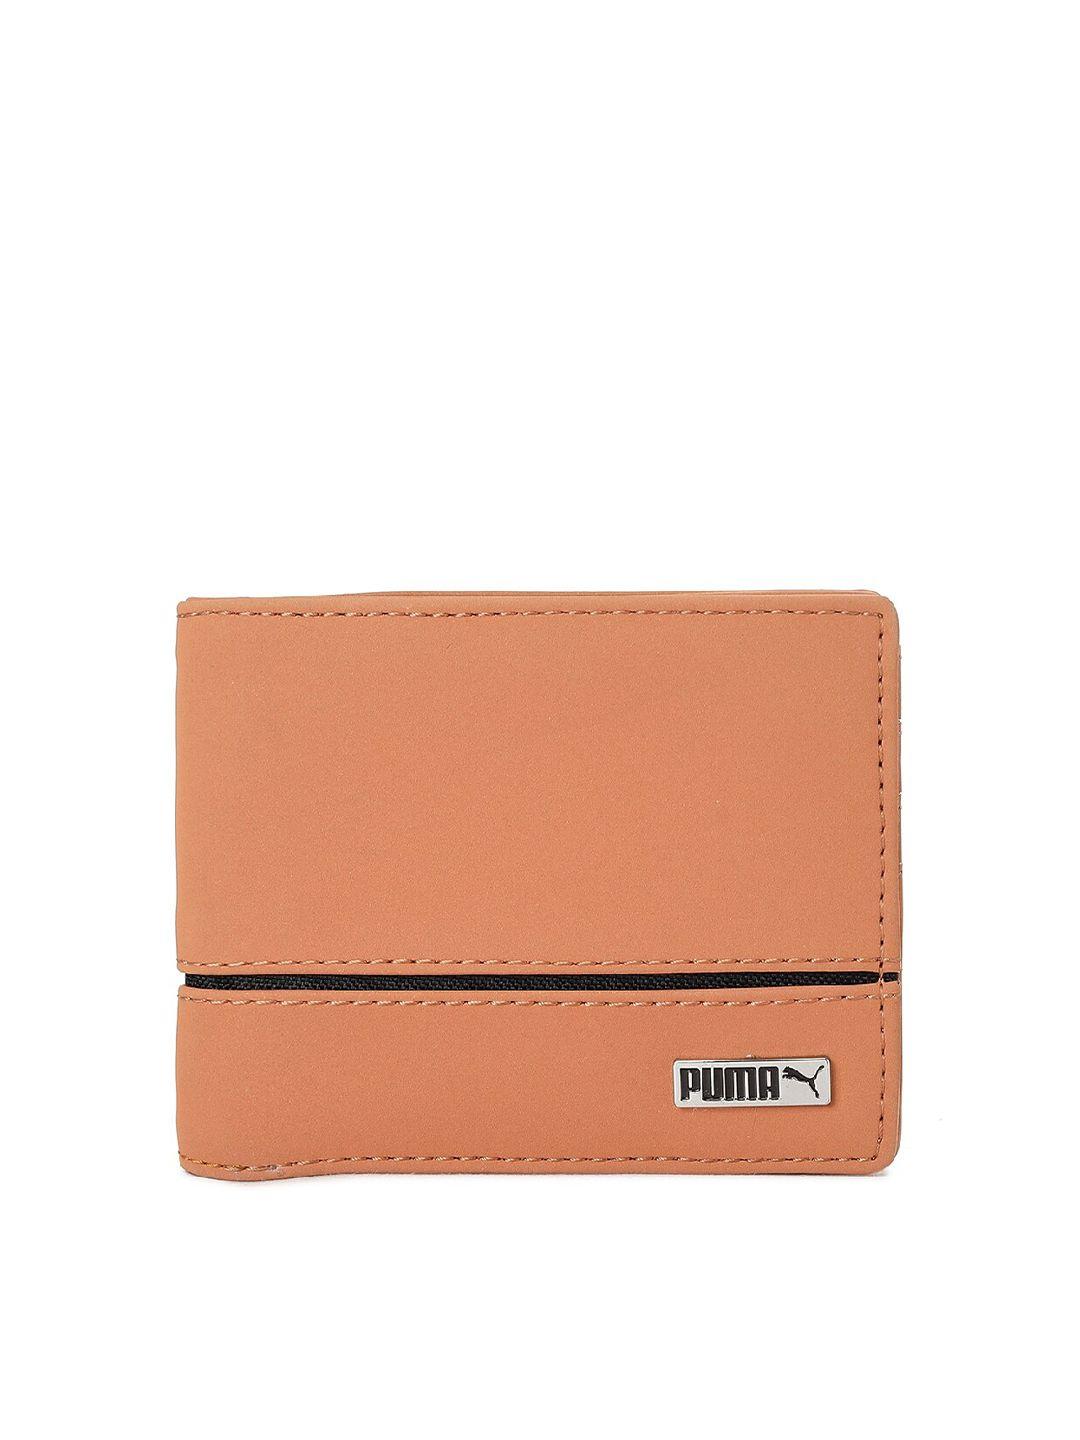 Puma Men Brown Two Fold Style Wallet